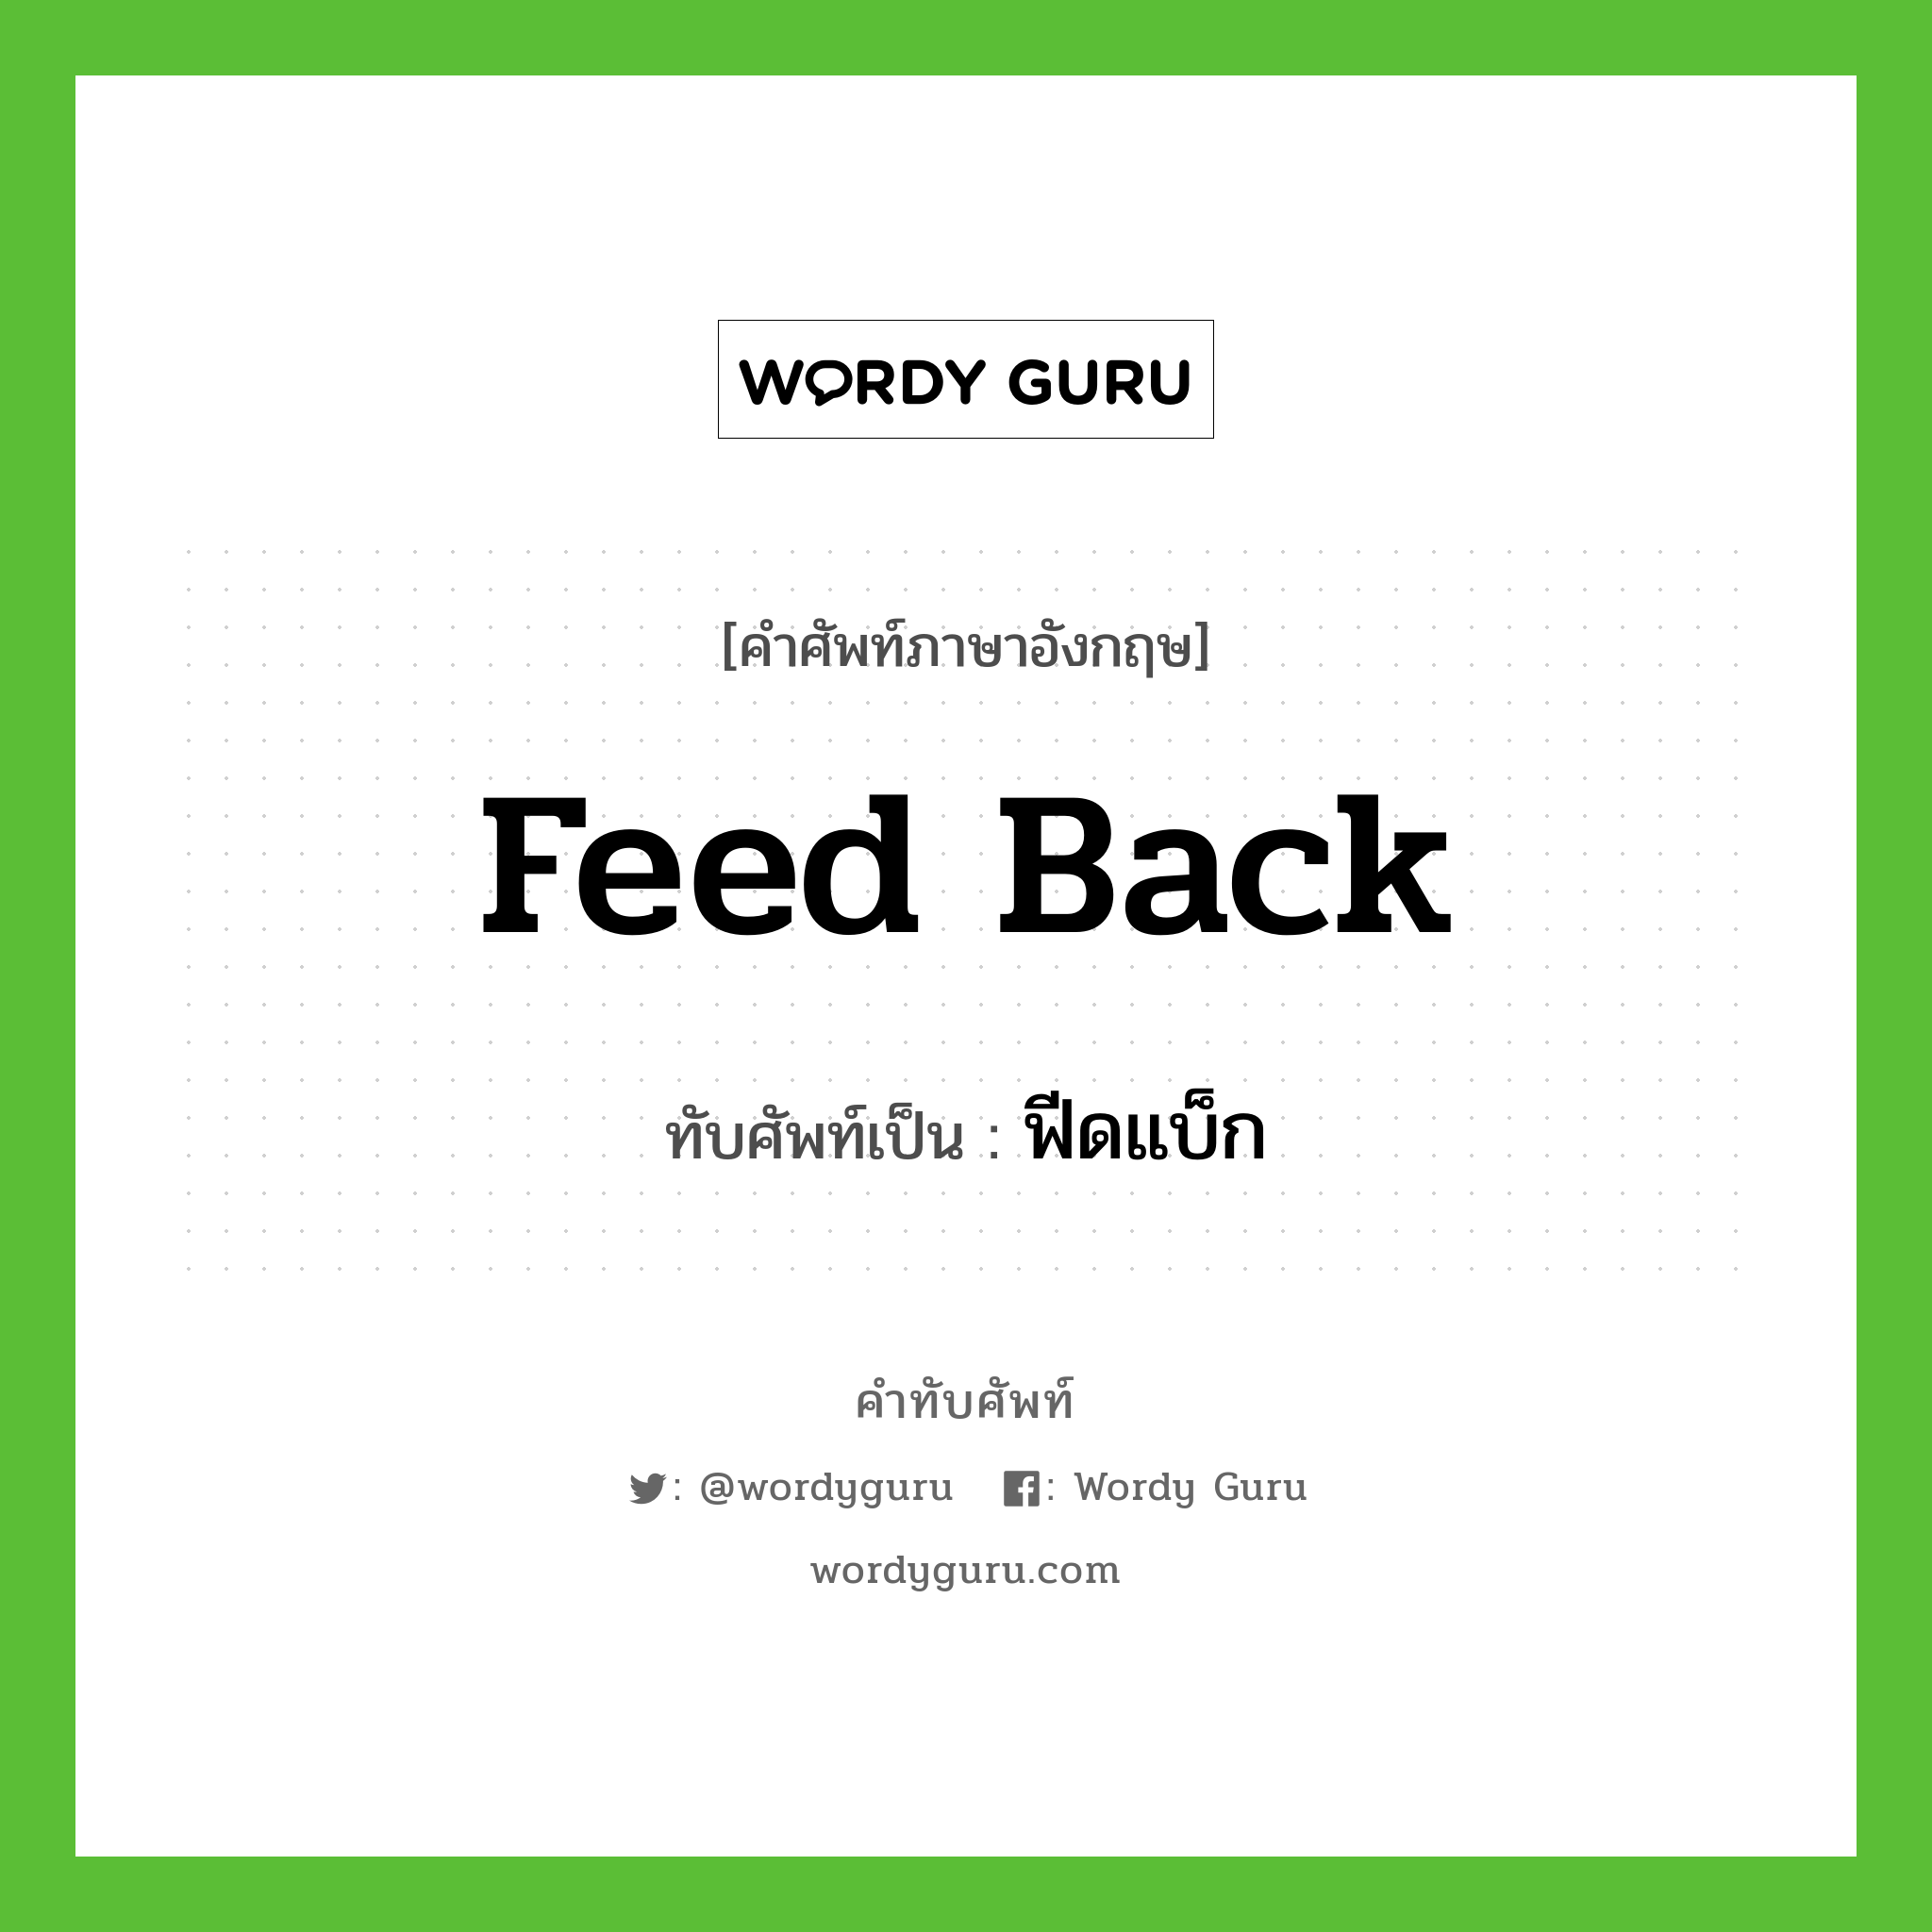 feed back เขียนเป็นคำไทยว่าอะไร?, คำศัพท์ภาษาอังกฤษ feed back ทับศัพท์เป็น ฟีดแบ็ก